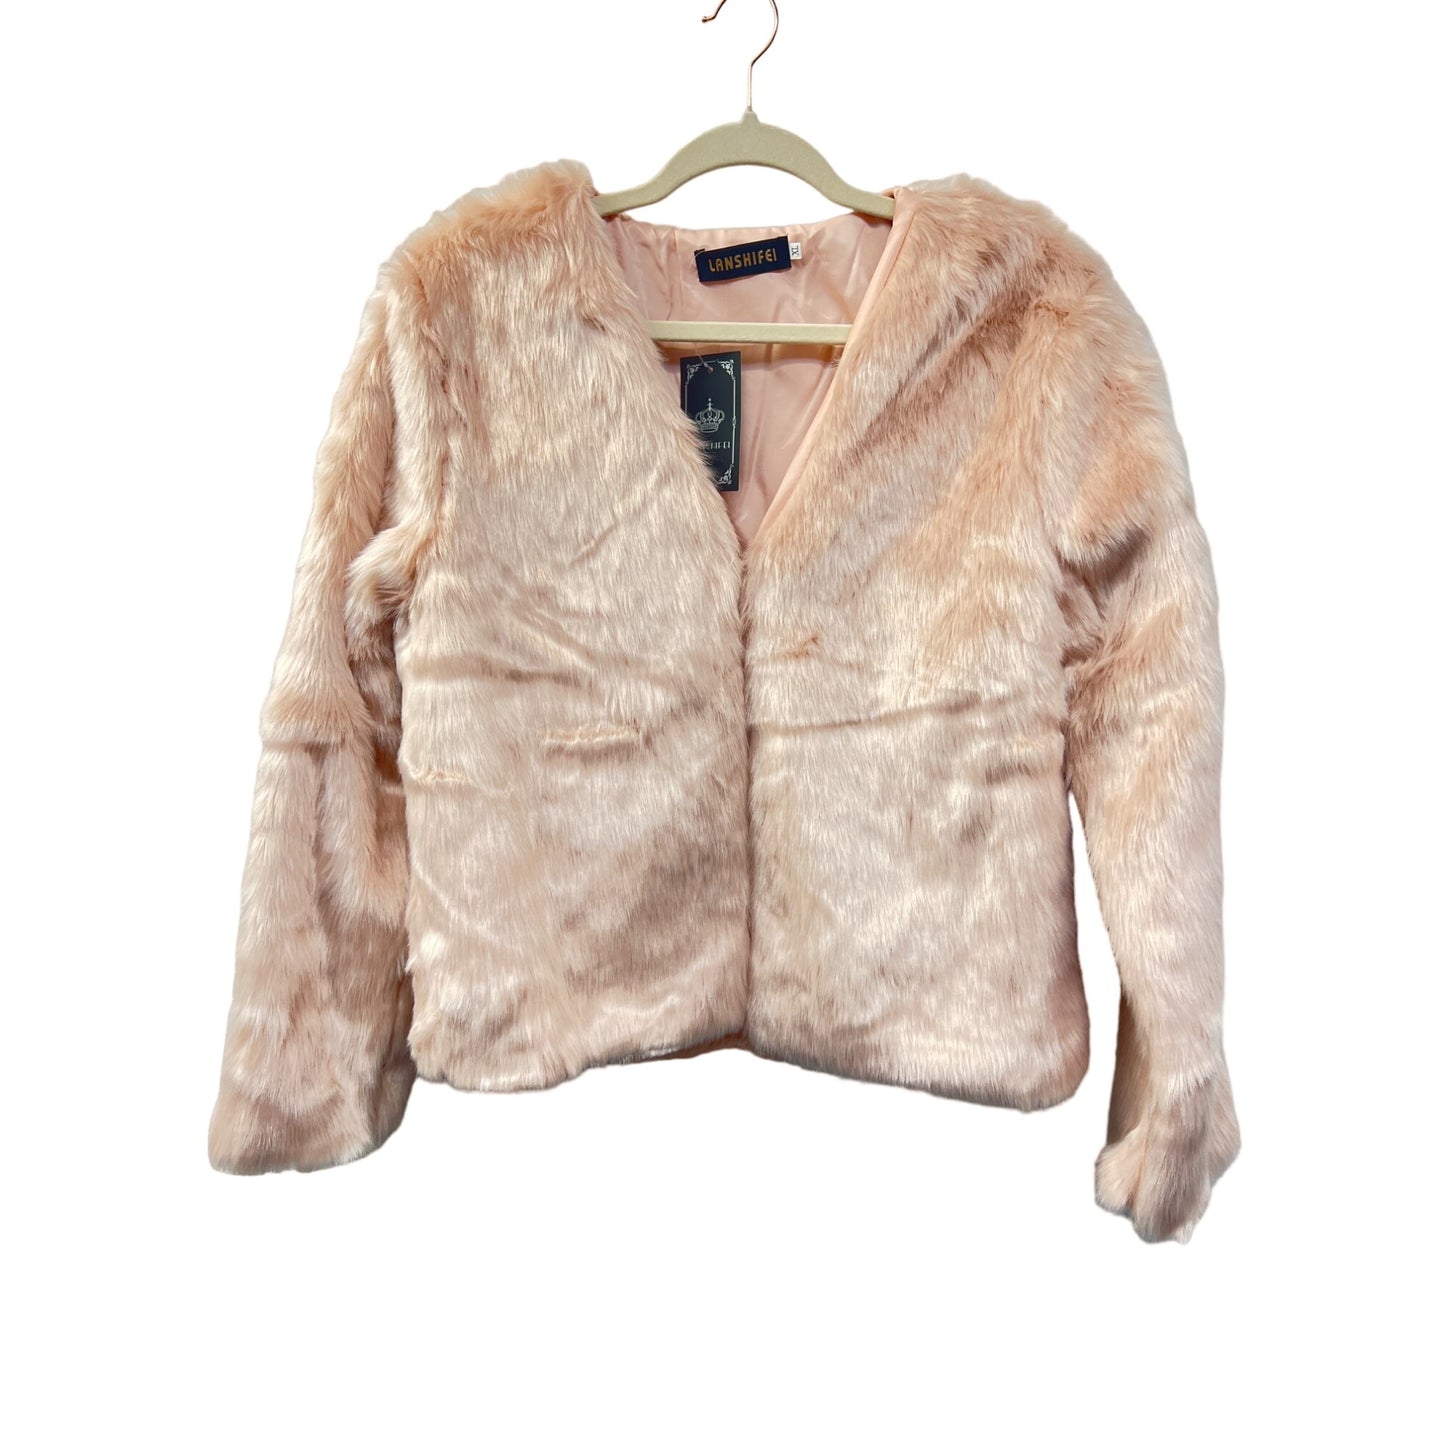 Lanshifei NWT Pink Faux Fur Bolero Jacket